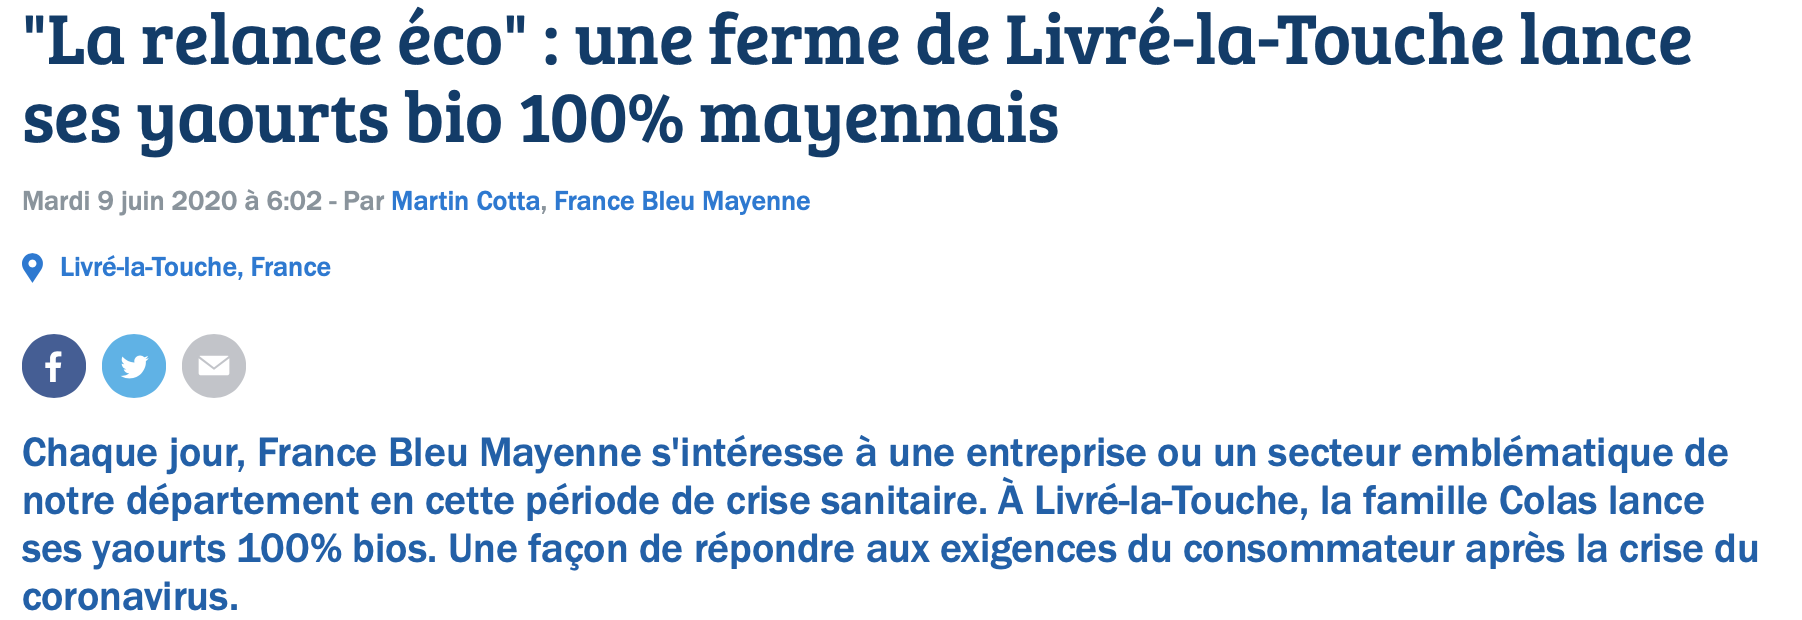 Article - France Bleu Mayenne